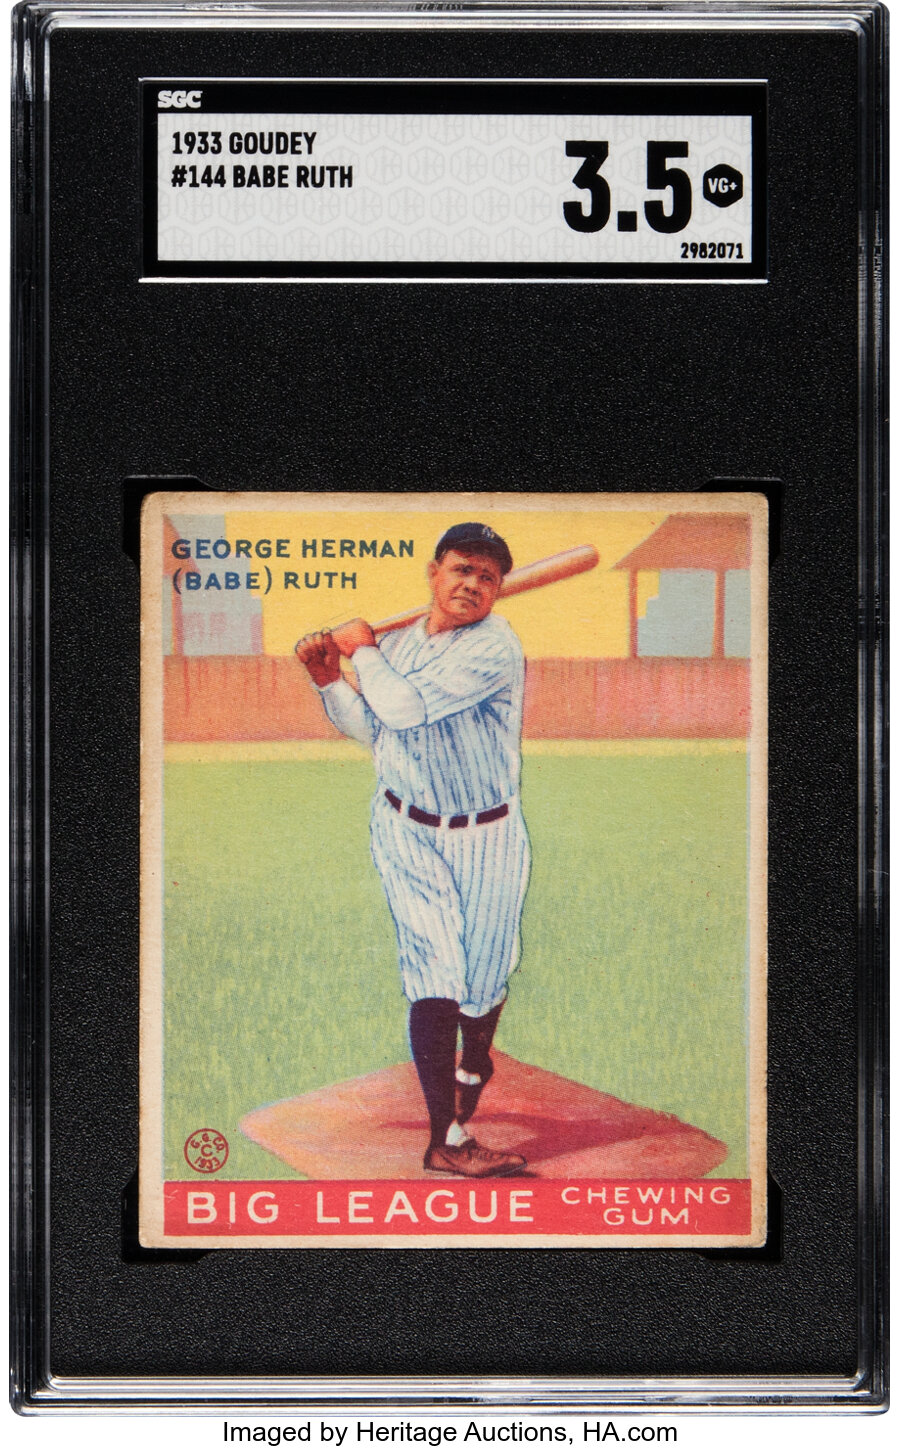 1933 Goudey Babe Ruth #144 SGC VG+ 3.5